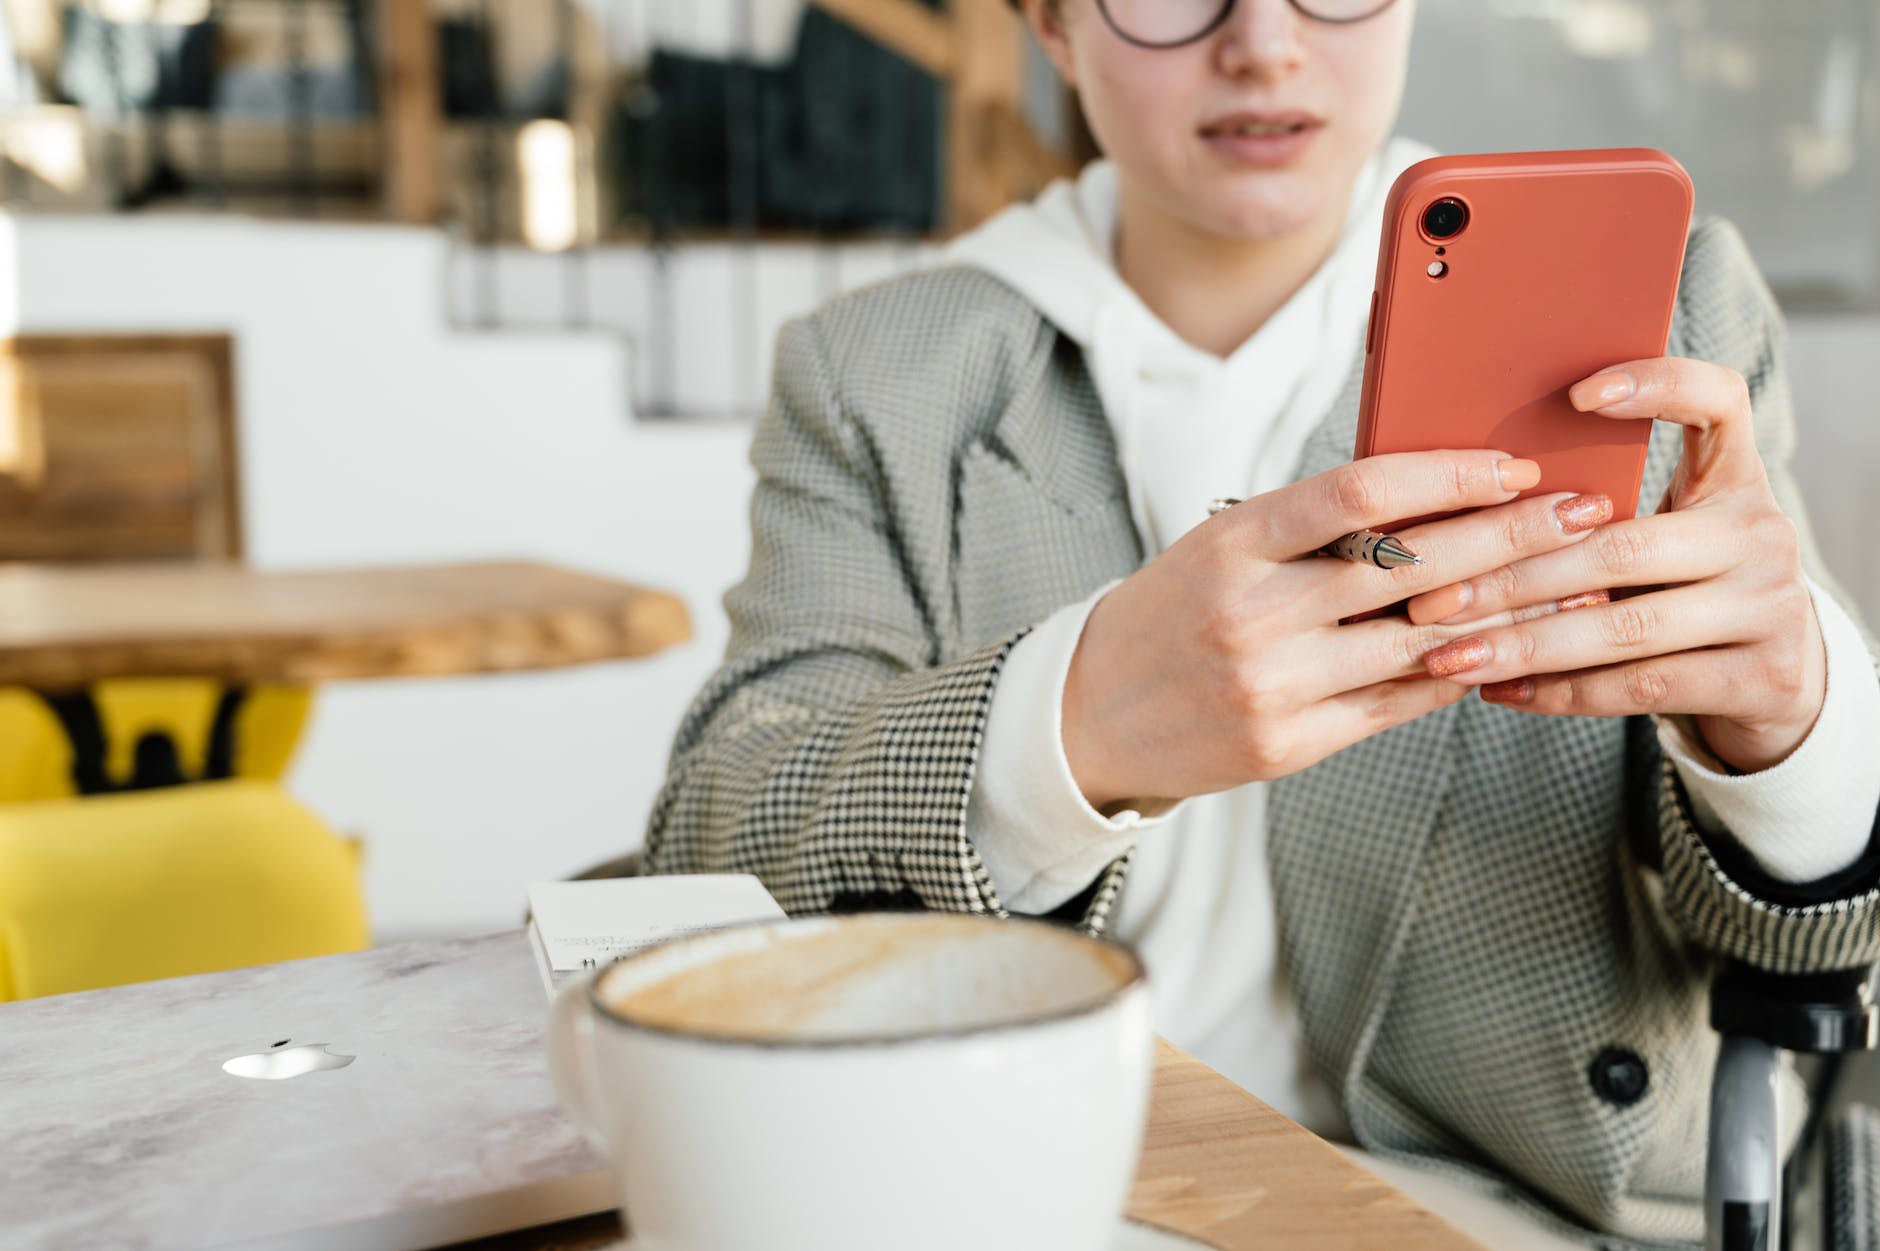 crop businesswoman using smartphone in cafe